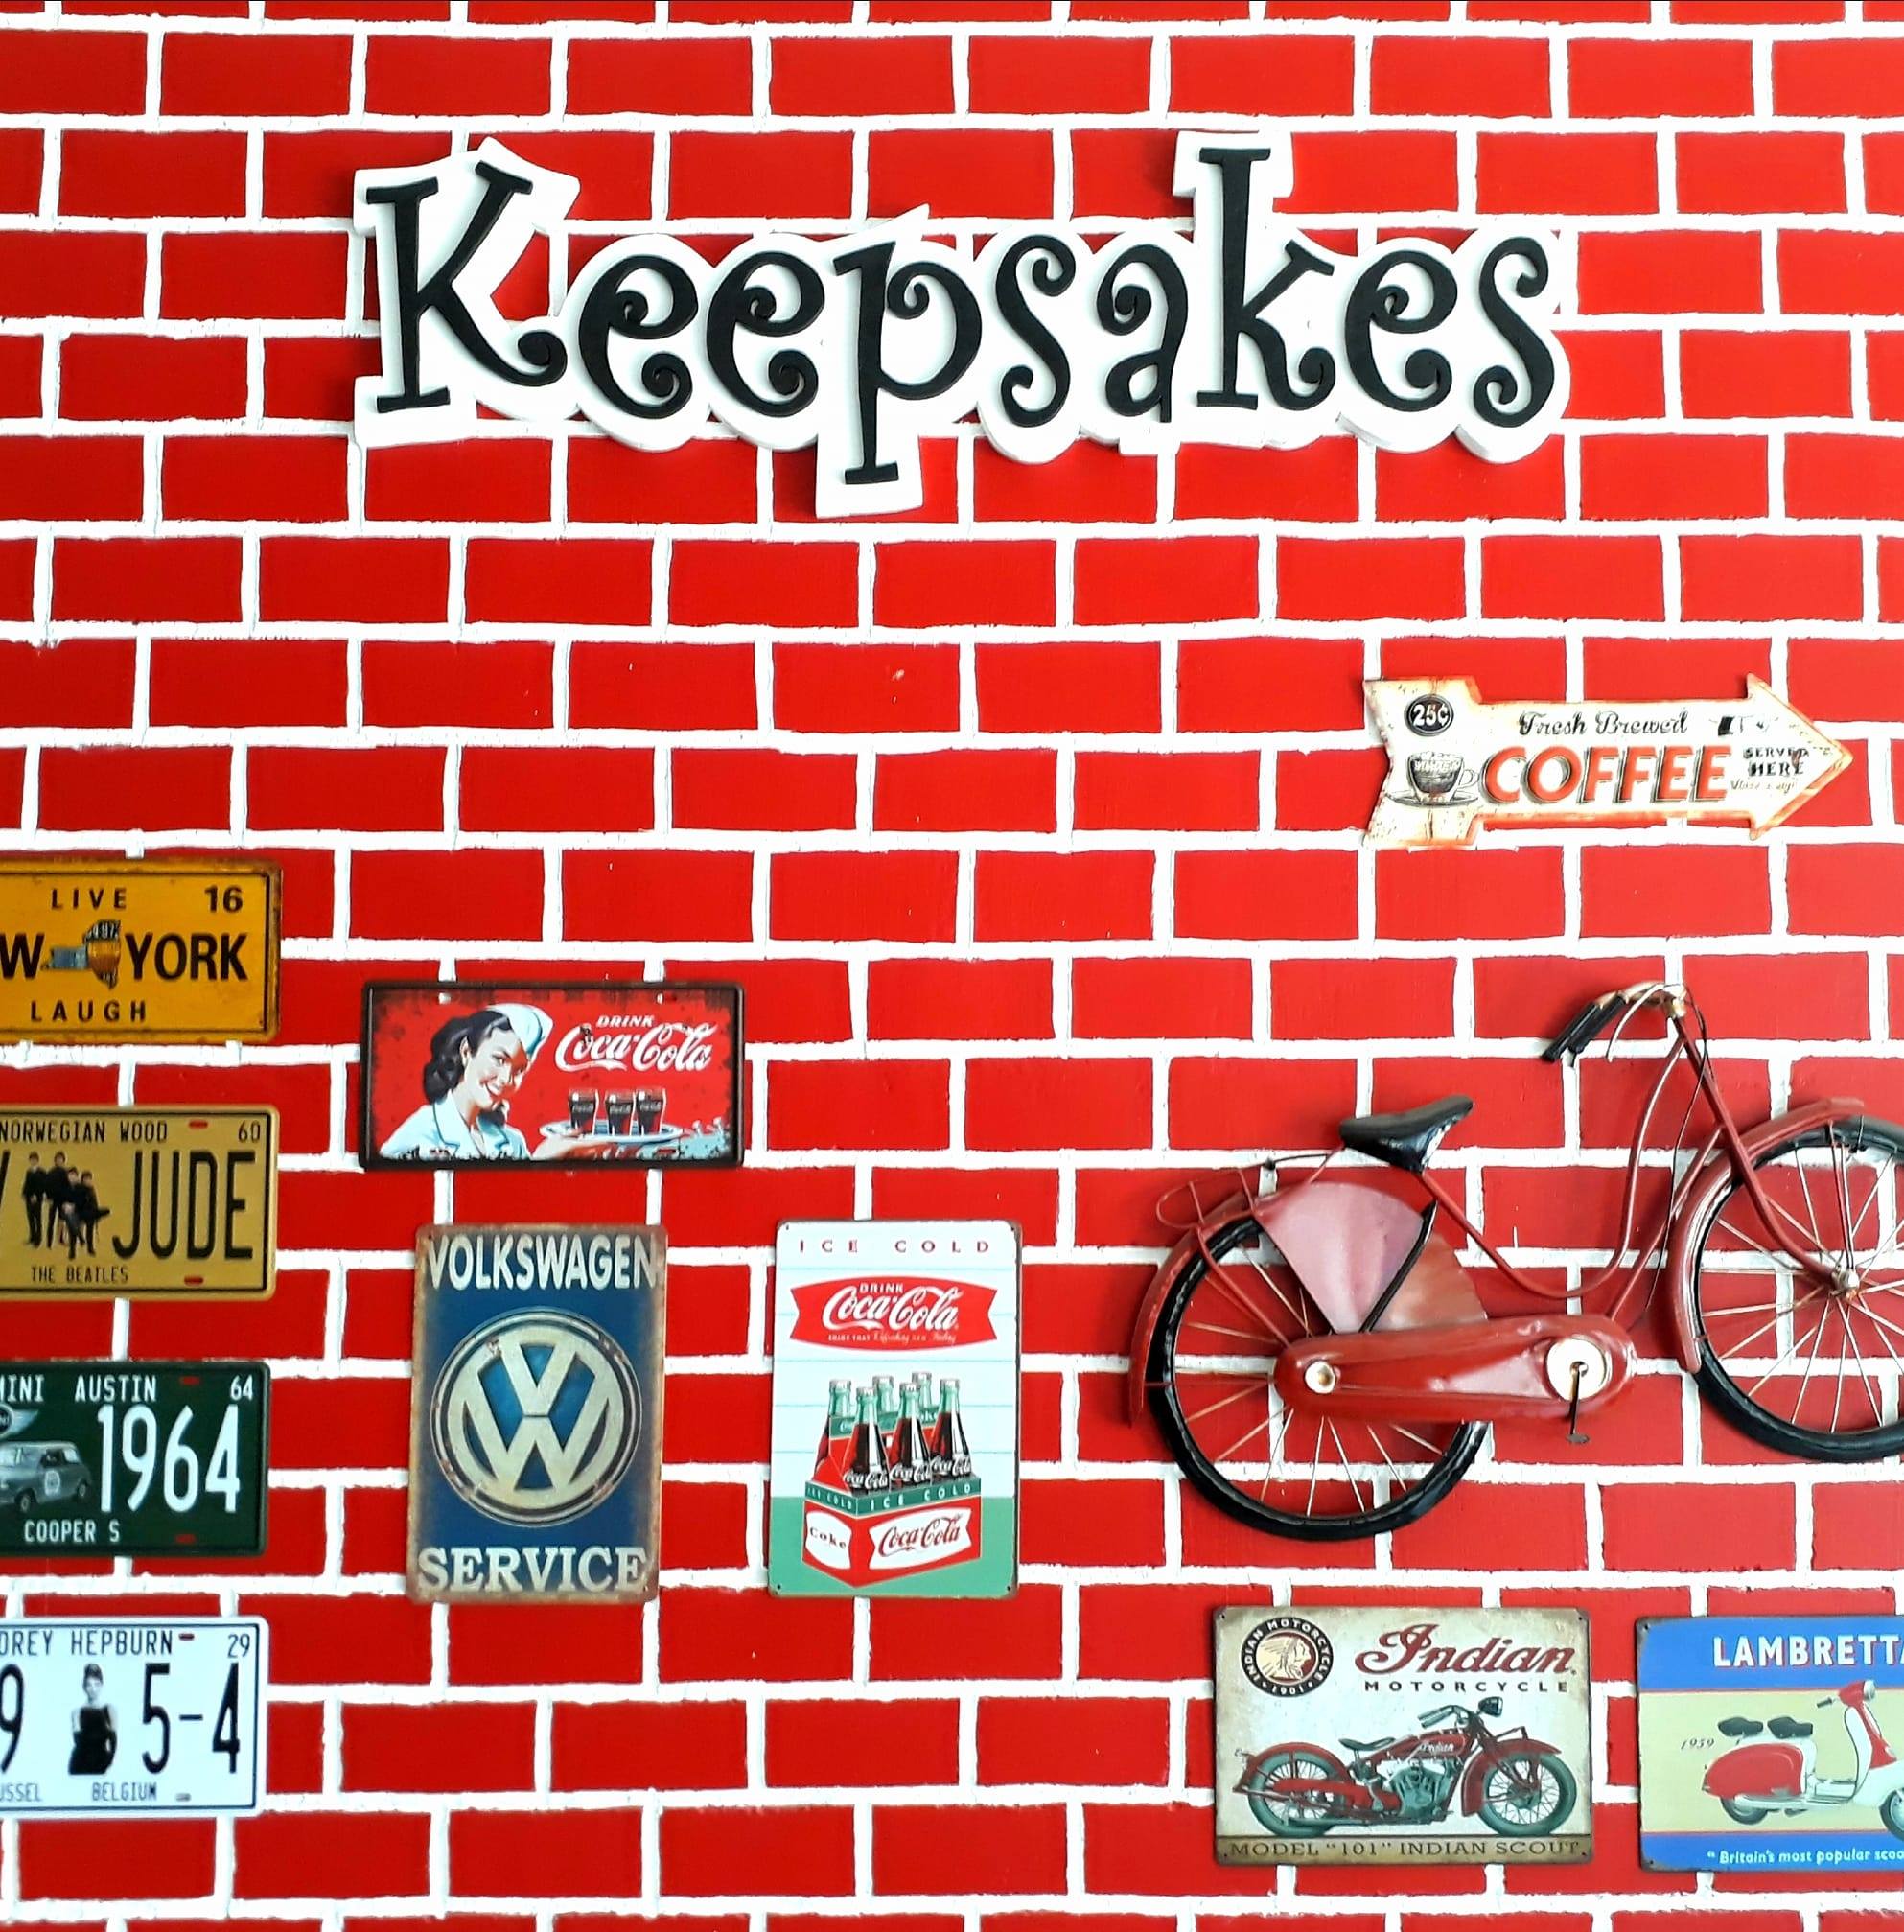 Keepsakes Cafe 1 PROFILE